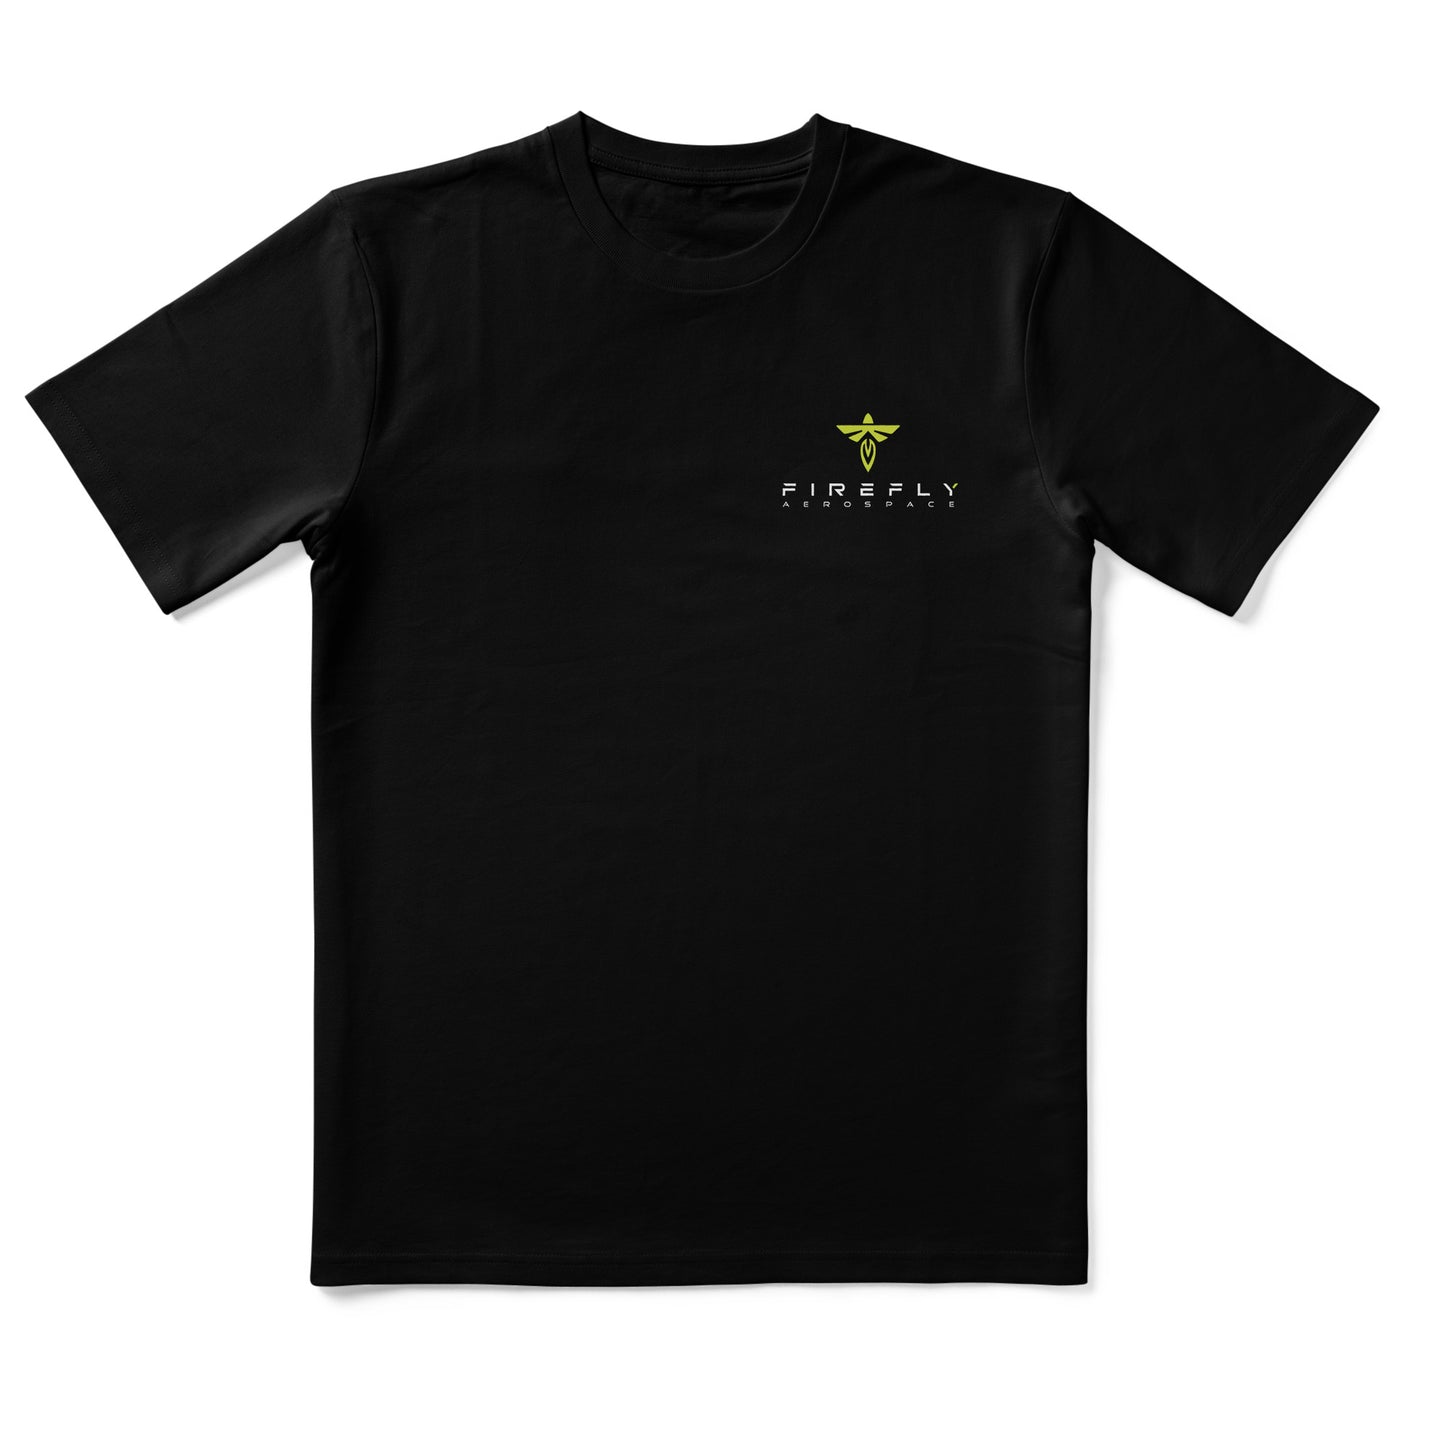 Firefly Reaver Engine T-Shirt